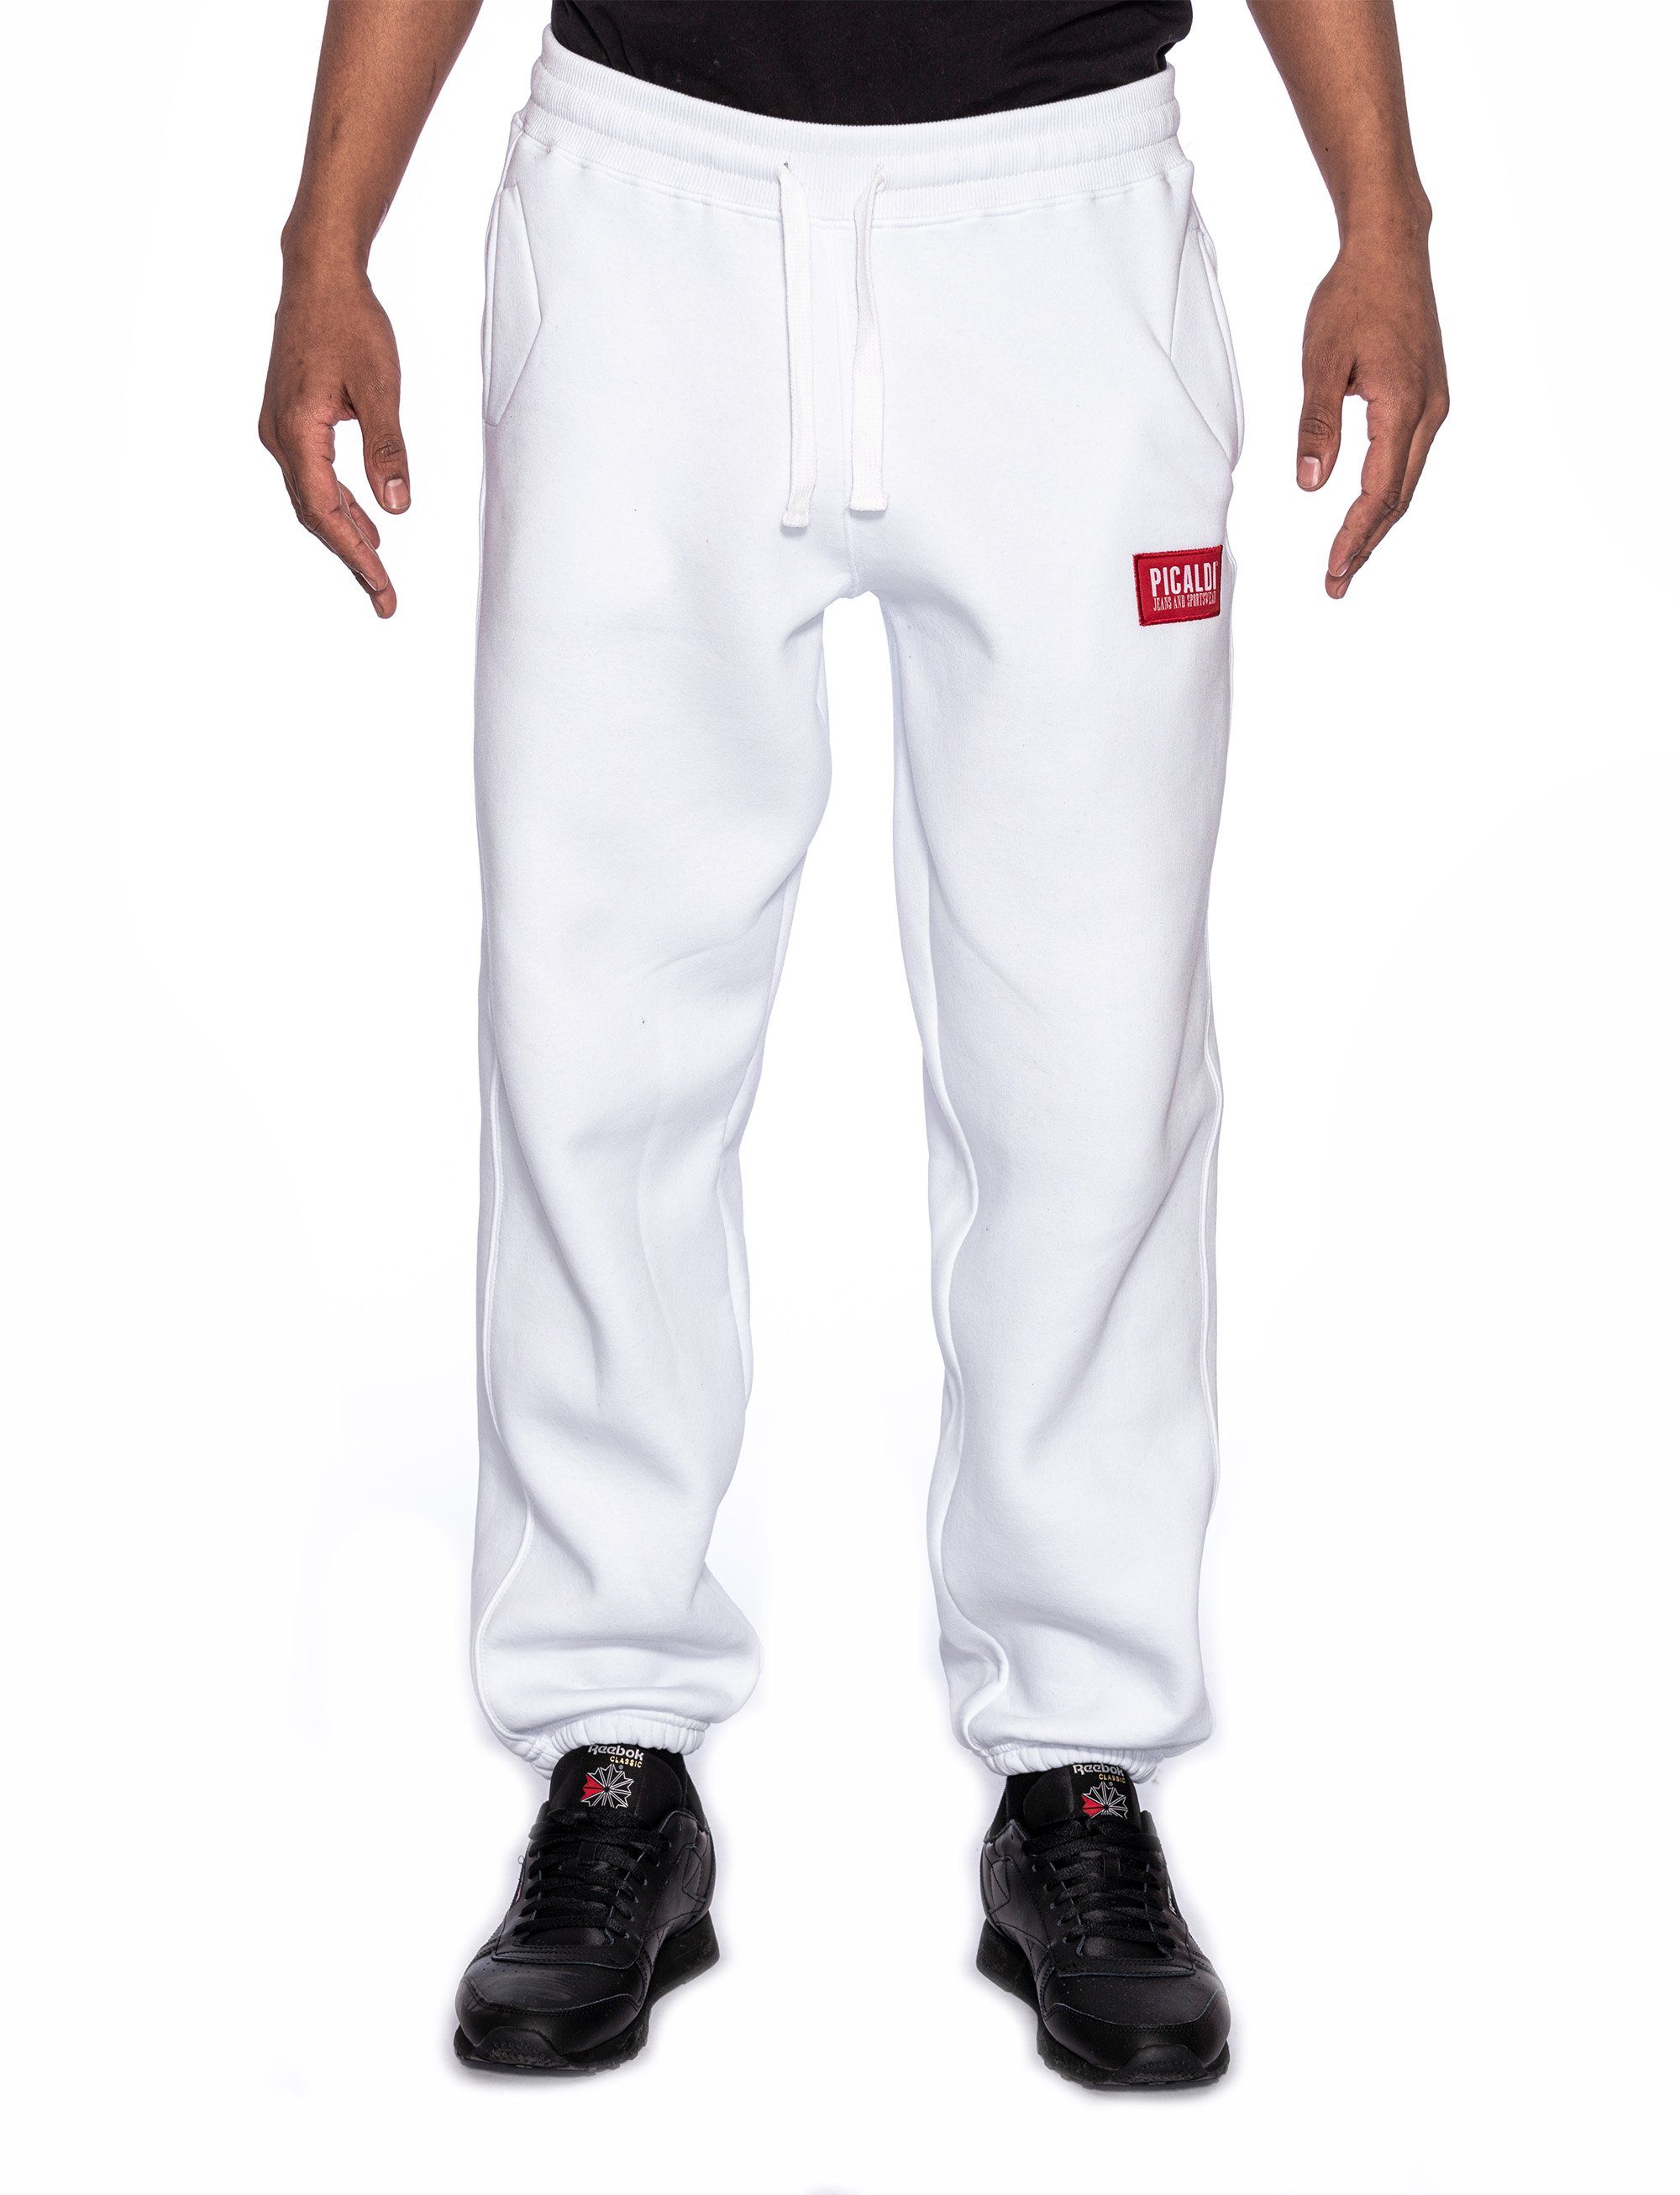 PICALDI Jeans Jogginghose Originals Freizeithose, Trainingshose, Sweatpant White